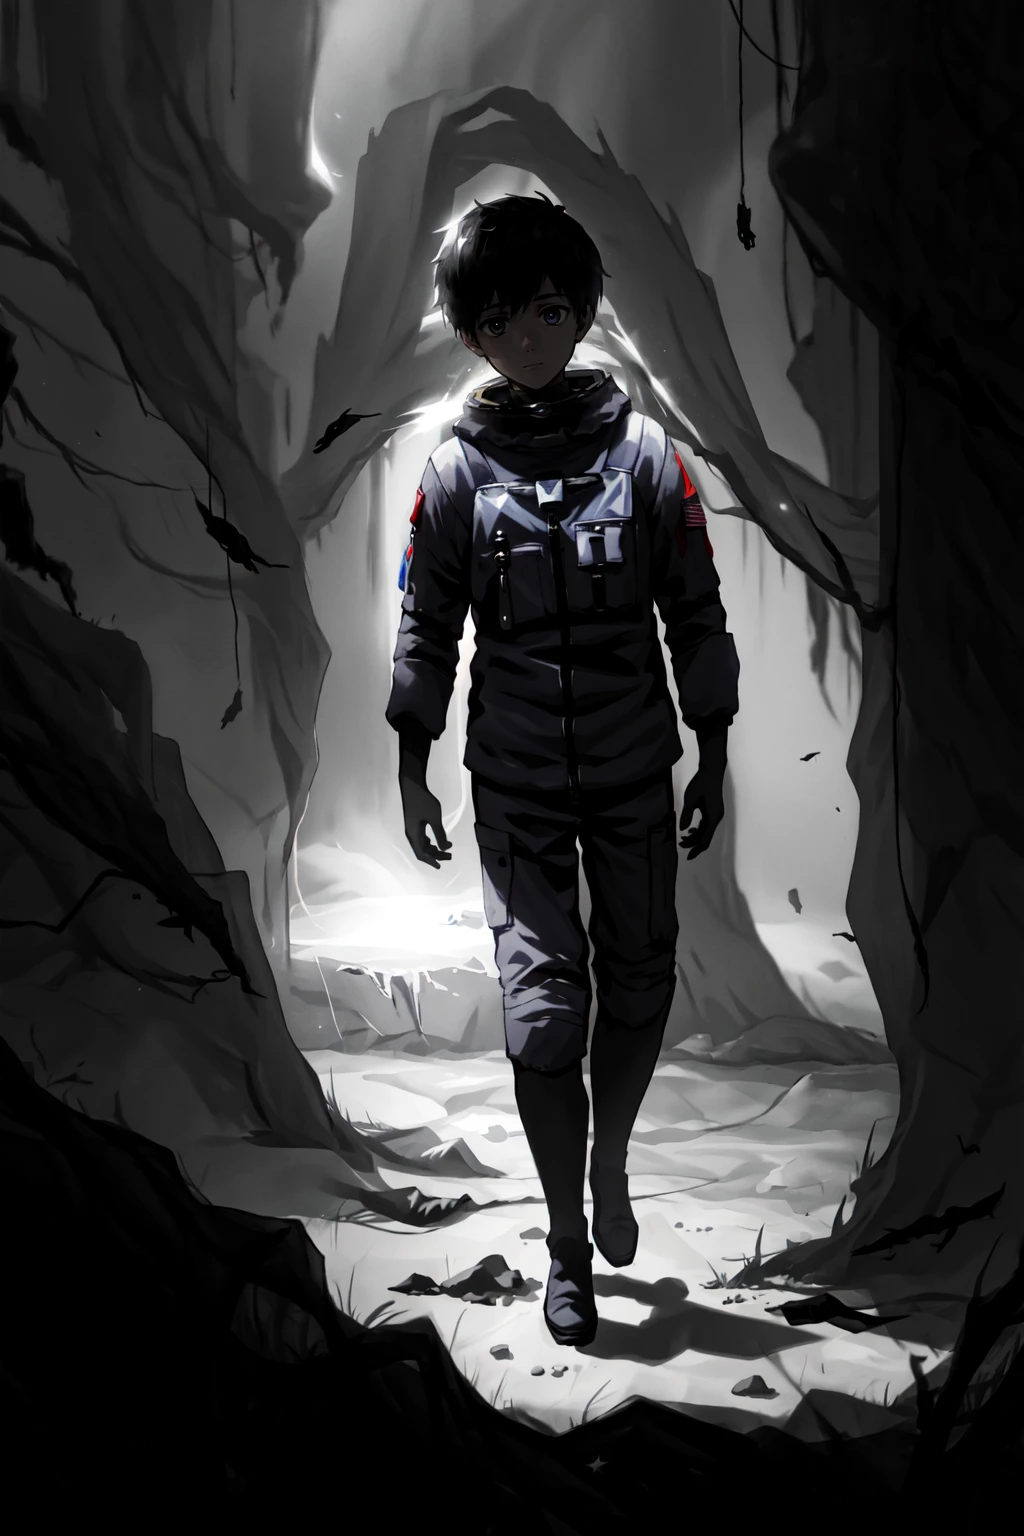 limco 风格, 1个男孩, 男性焦点, 月球上的宇航员, 抑郁特征, 恐怖空间, 极致光影